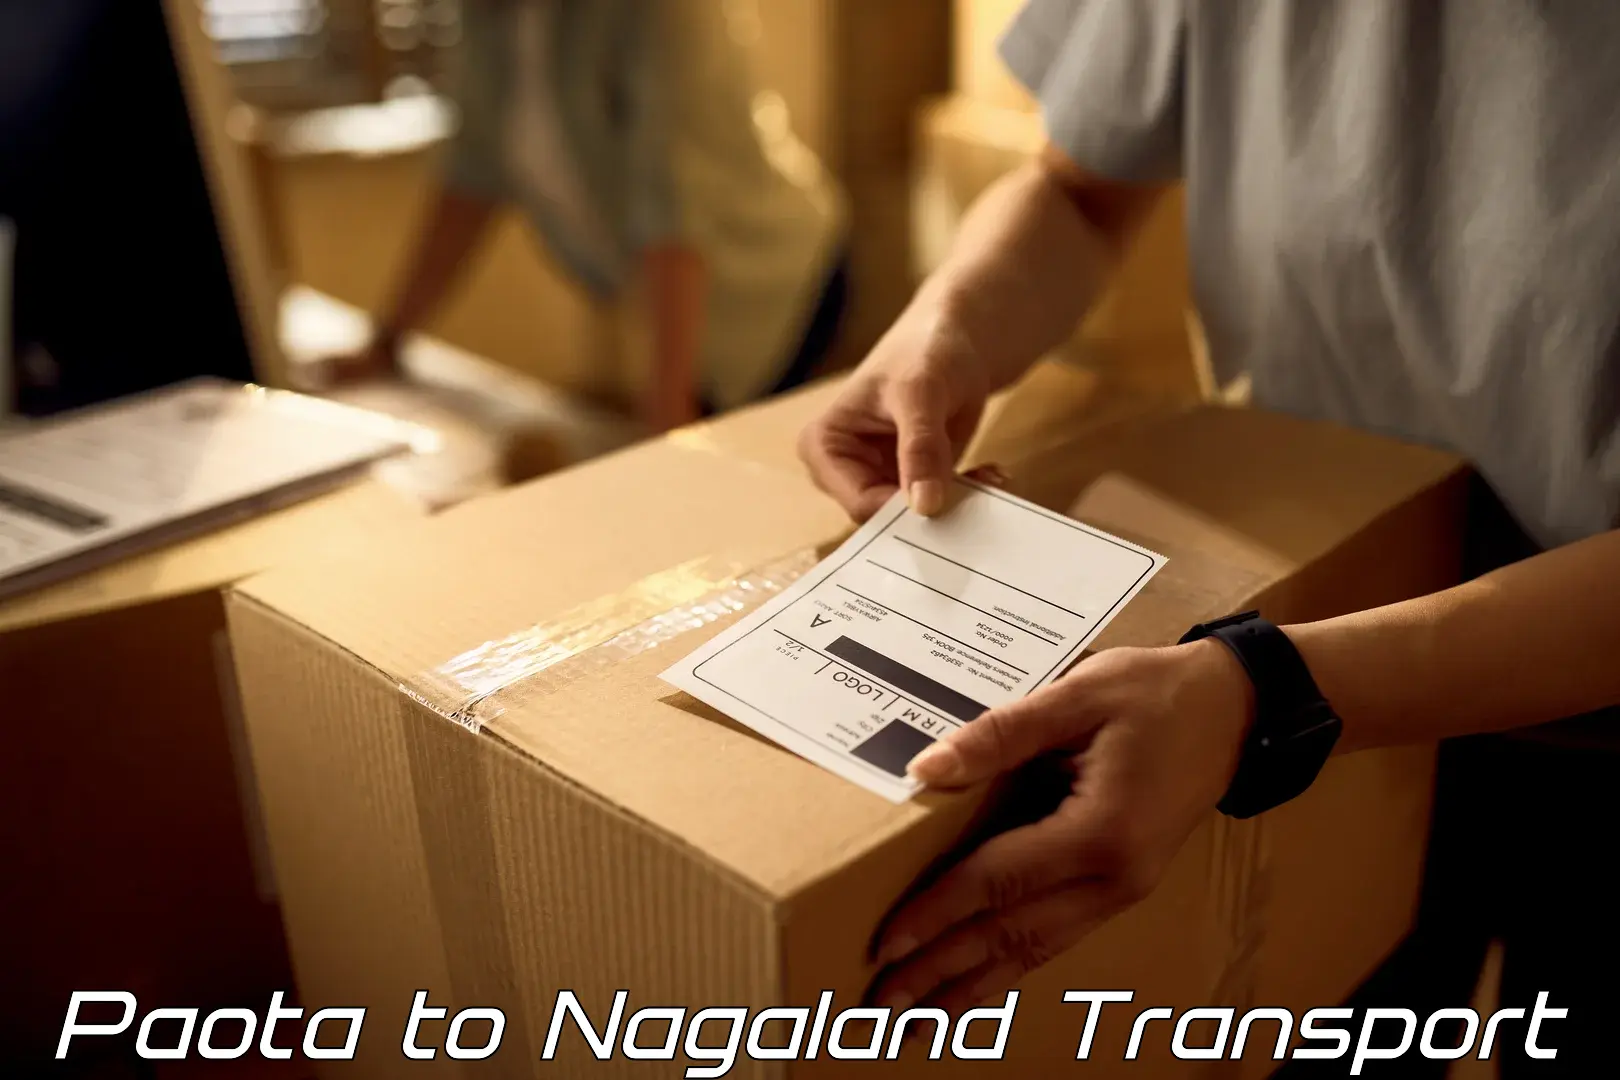 Daily transport service Paota to Nagaland